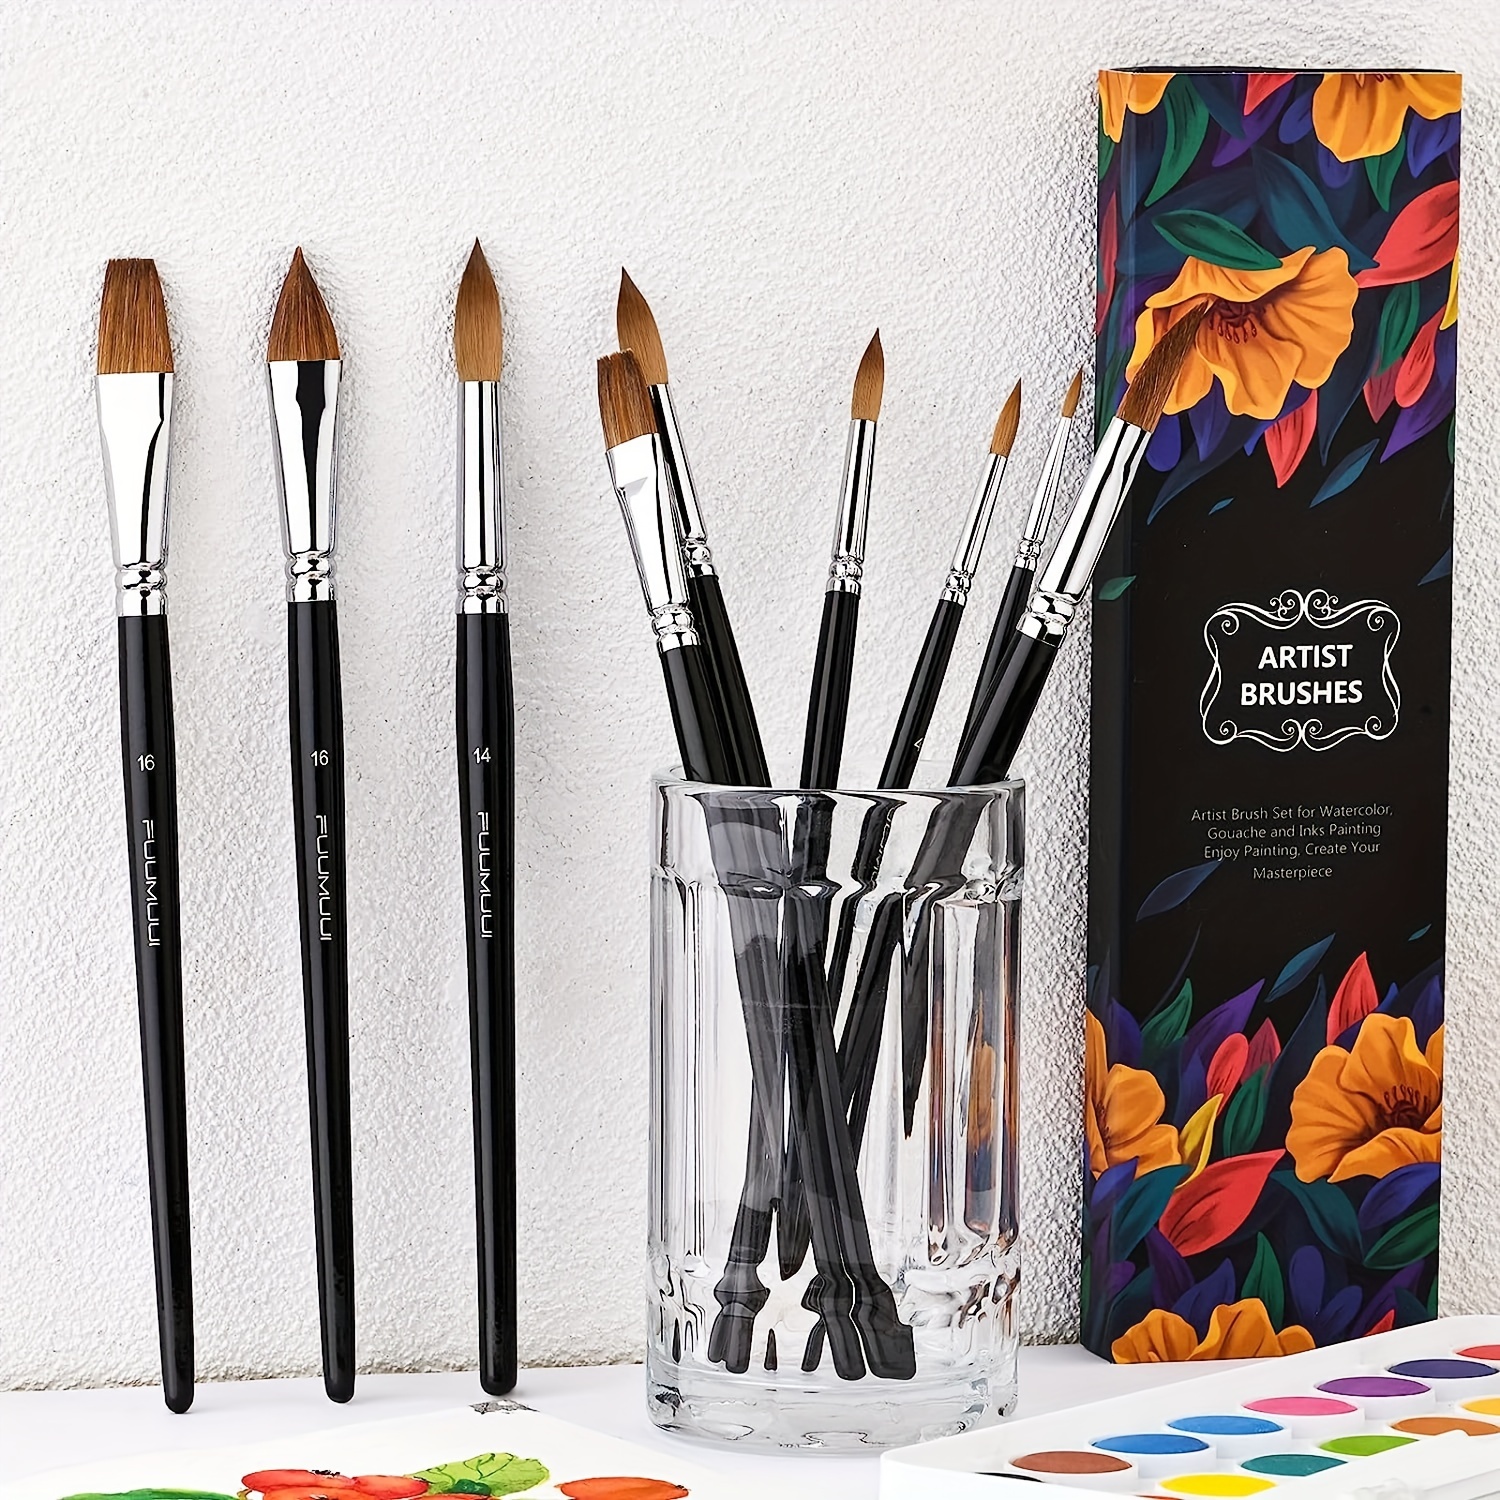  Artist Filbert Paint Brushes Set,9 Pcs Professional